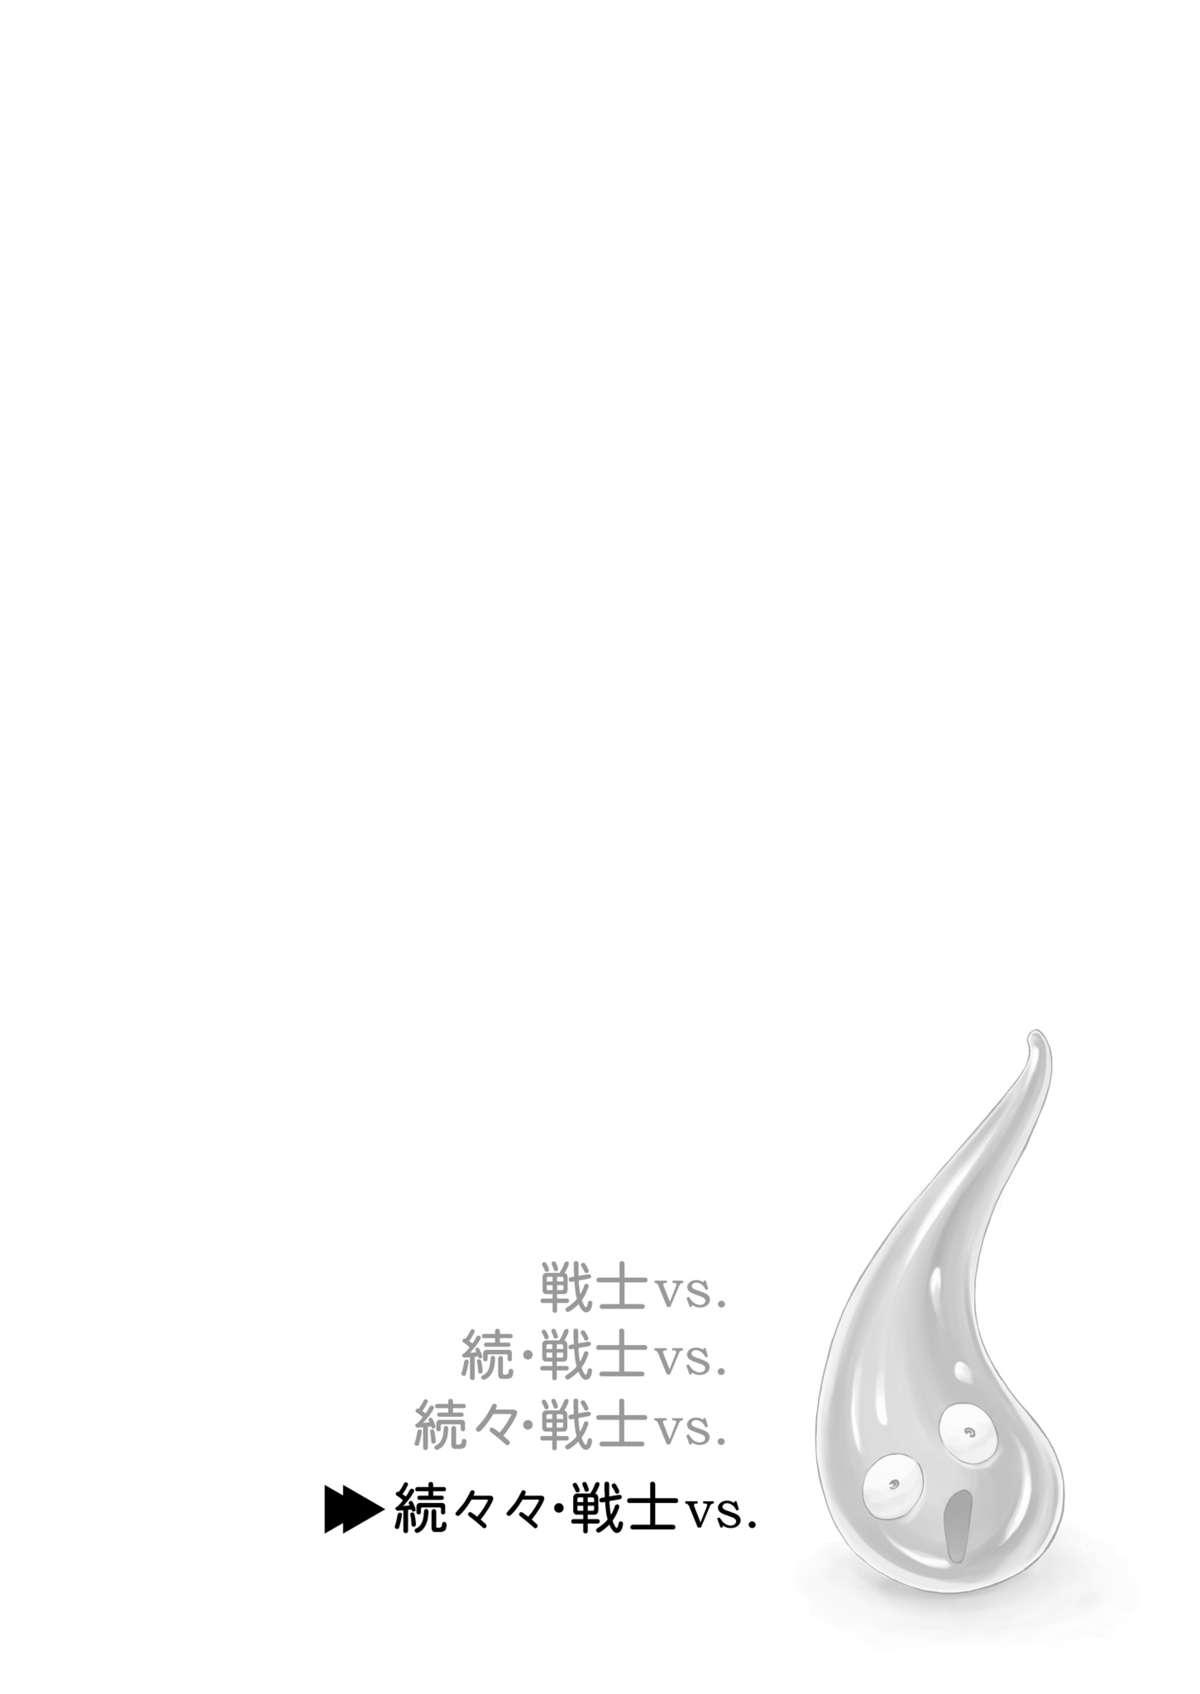 Juggs Zokuzokuzoku Senshi vs. - Dragon quest iii Perfect Body - Page 2